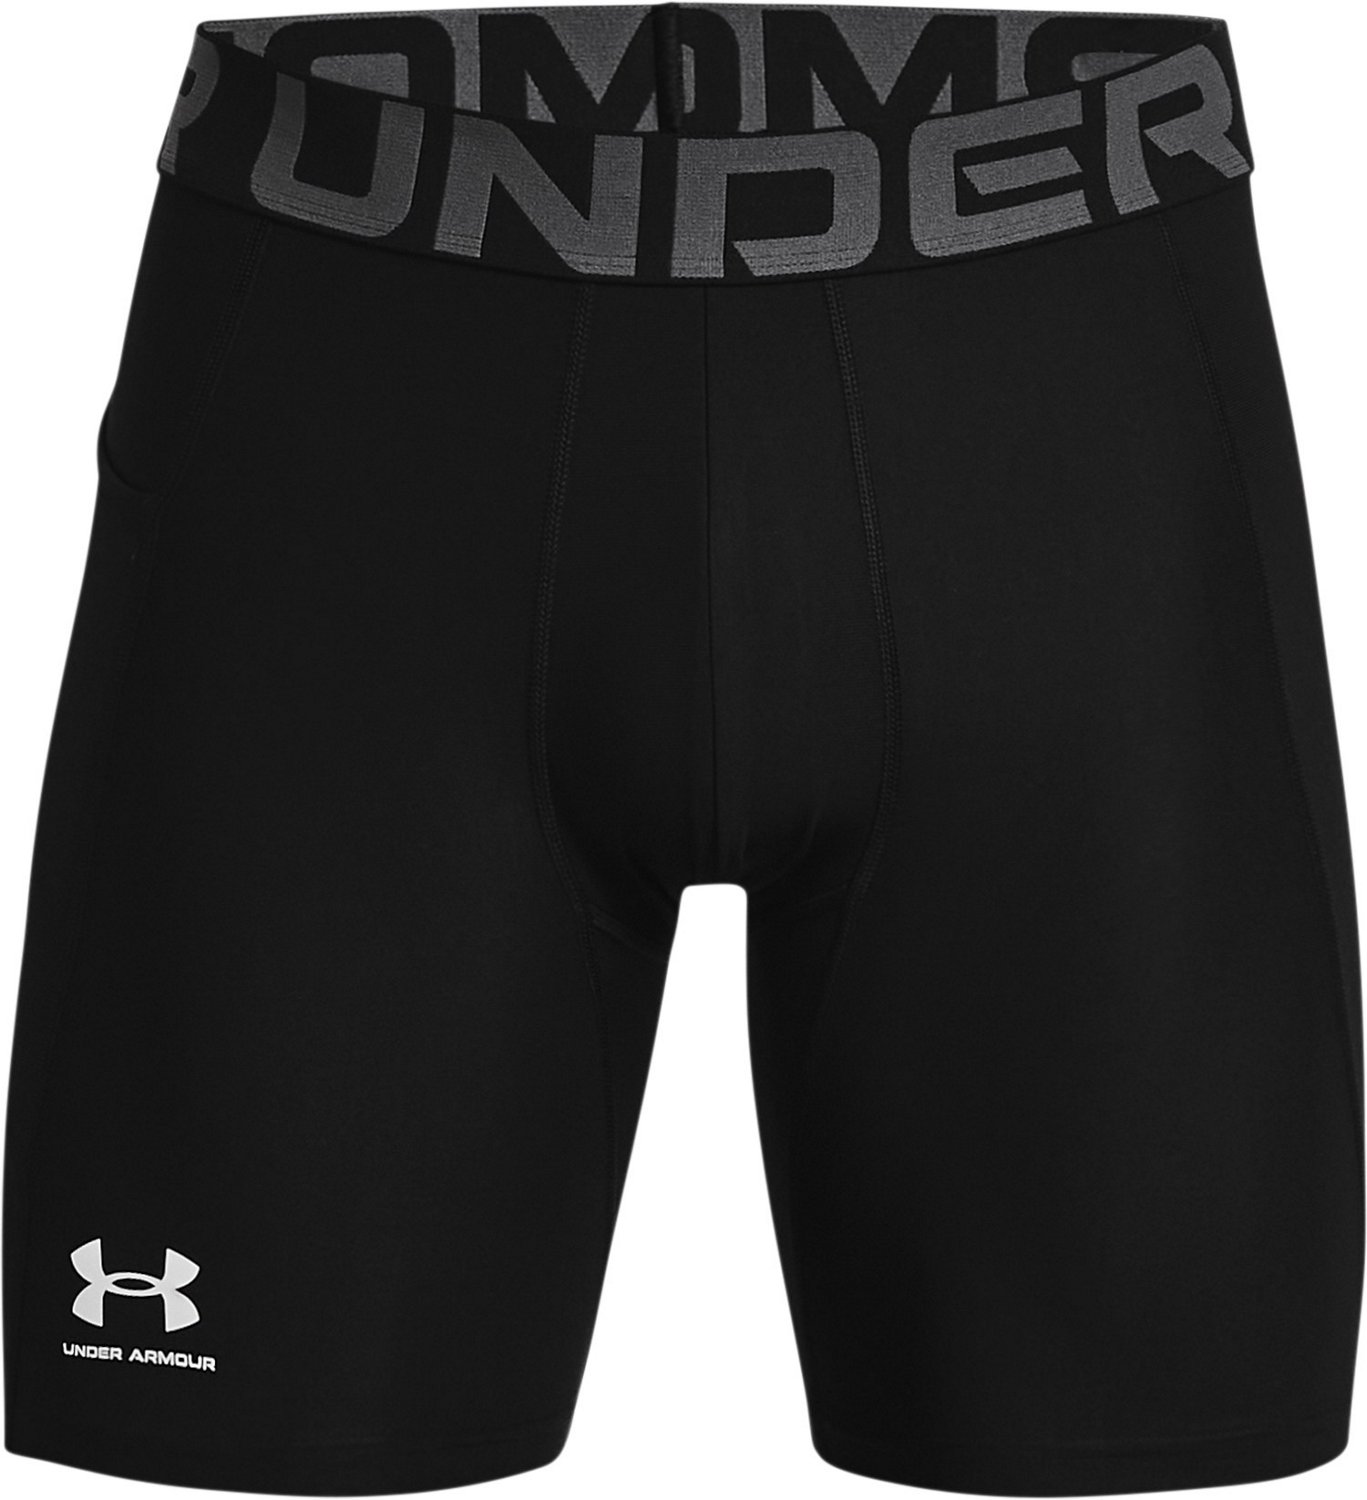 Under Armour - Men's HeatGear® Armour Mid Compression Shorts